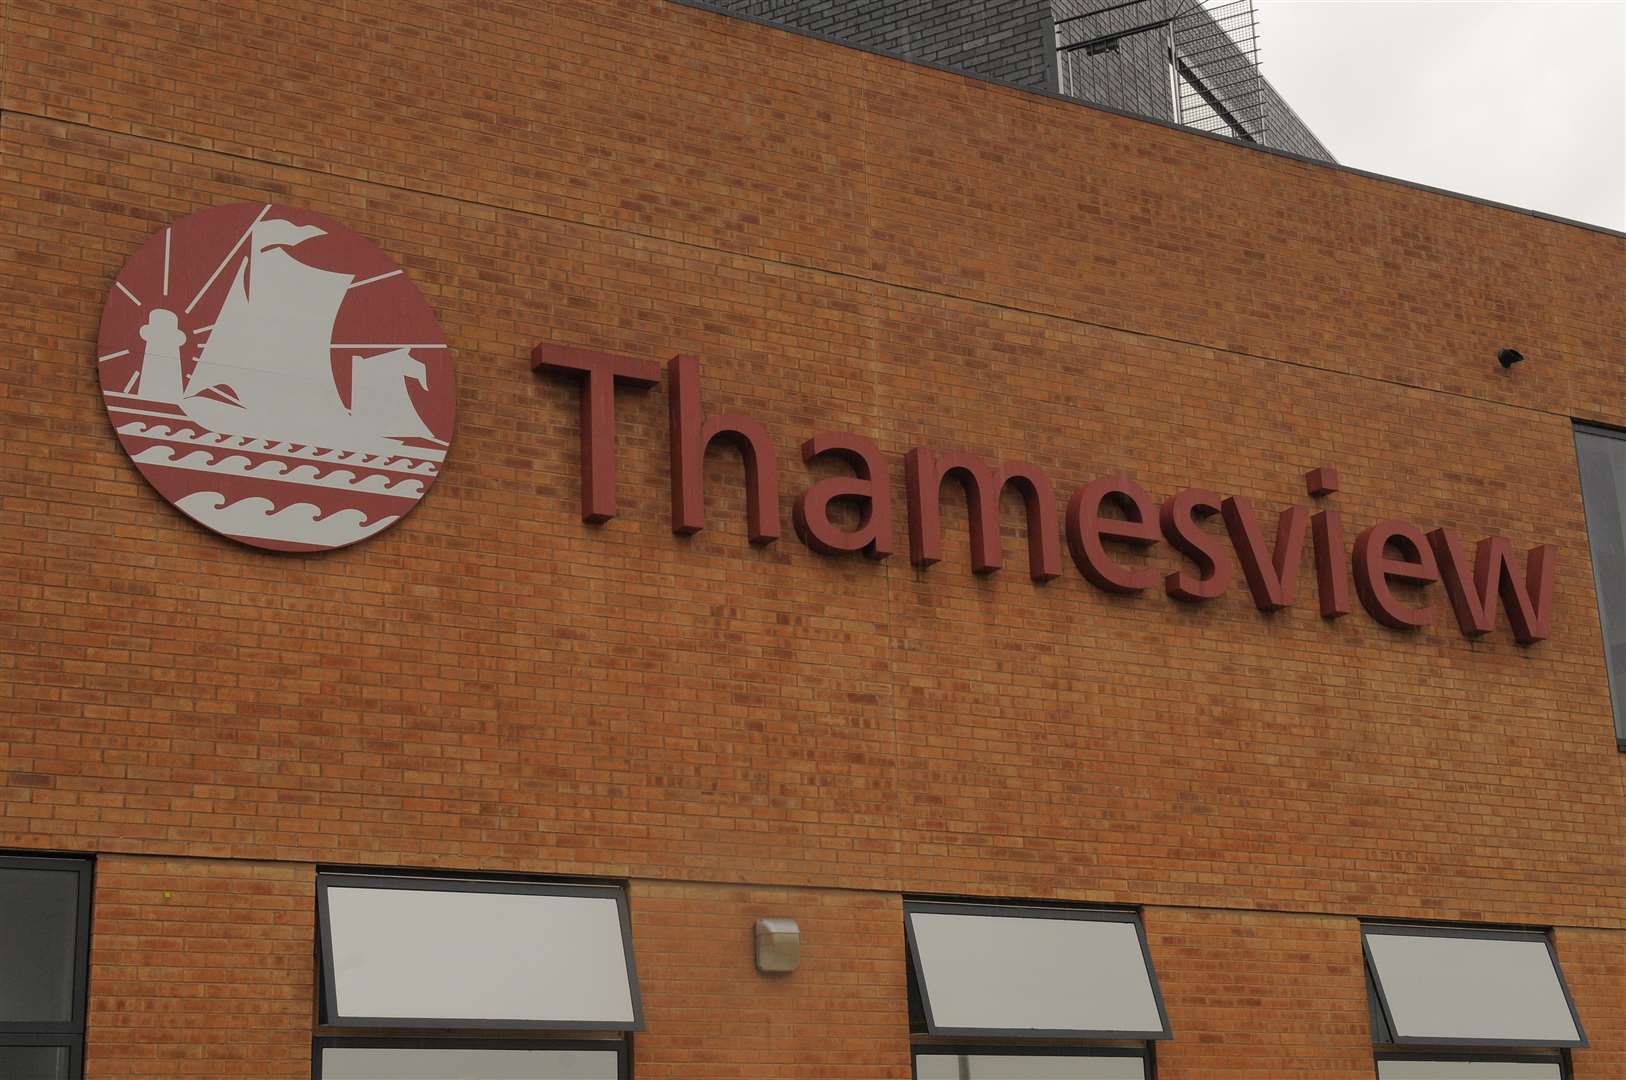 Thamesview School, Thong Lane, Gravesend is celebrating its 50th anniversary